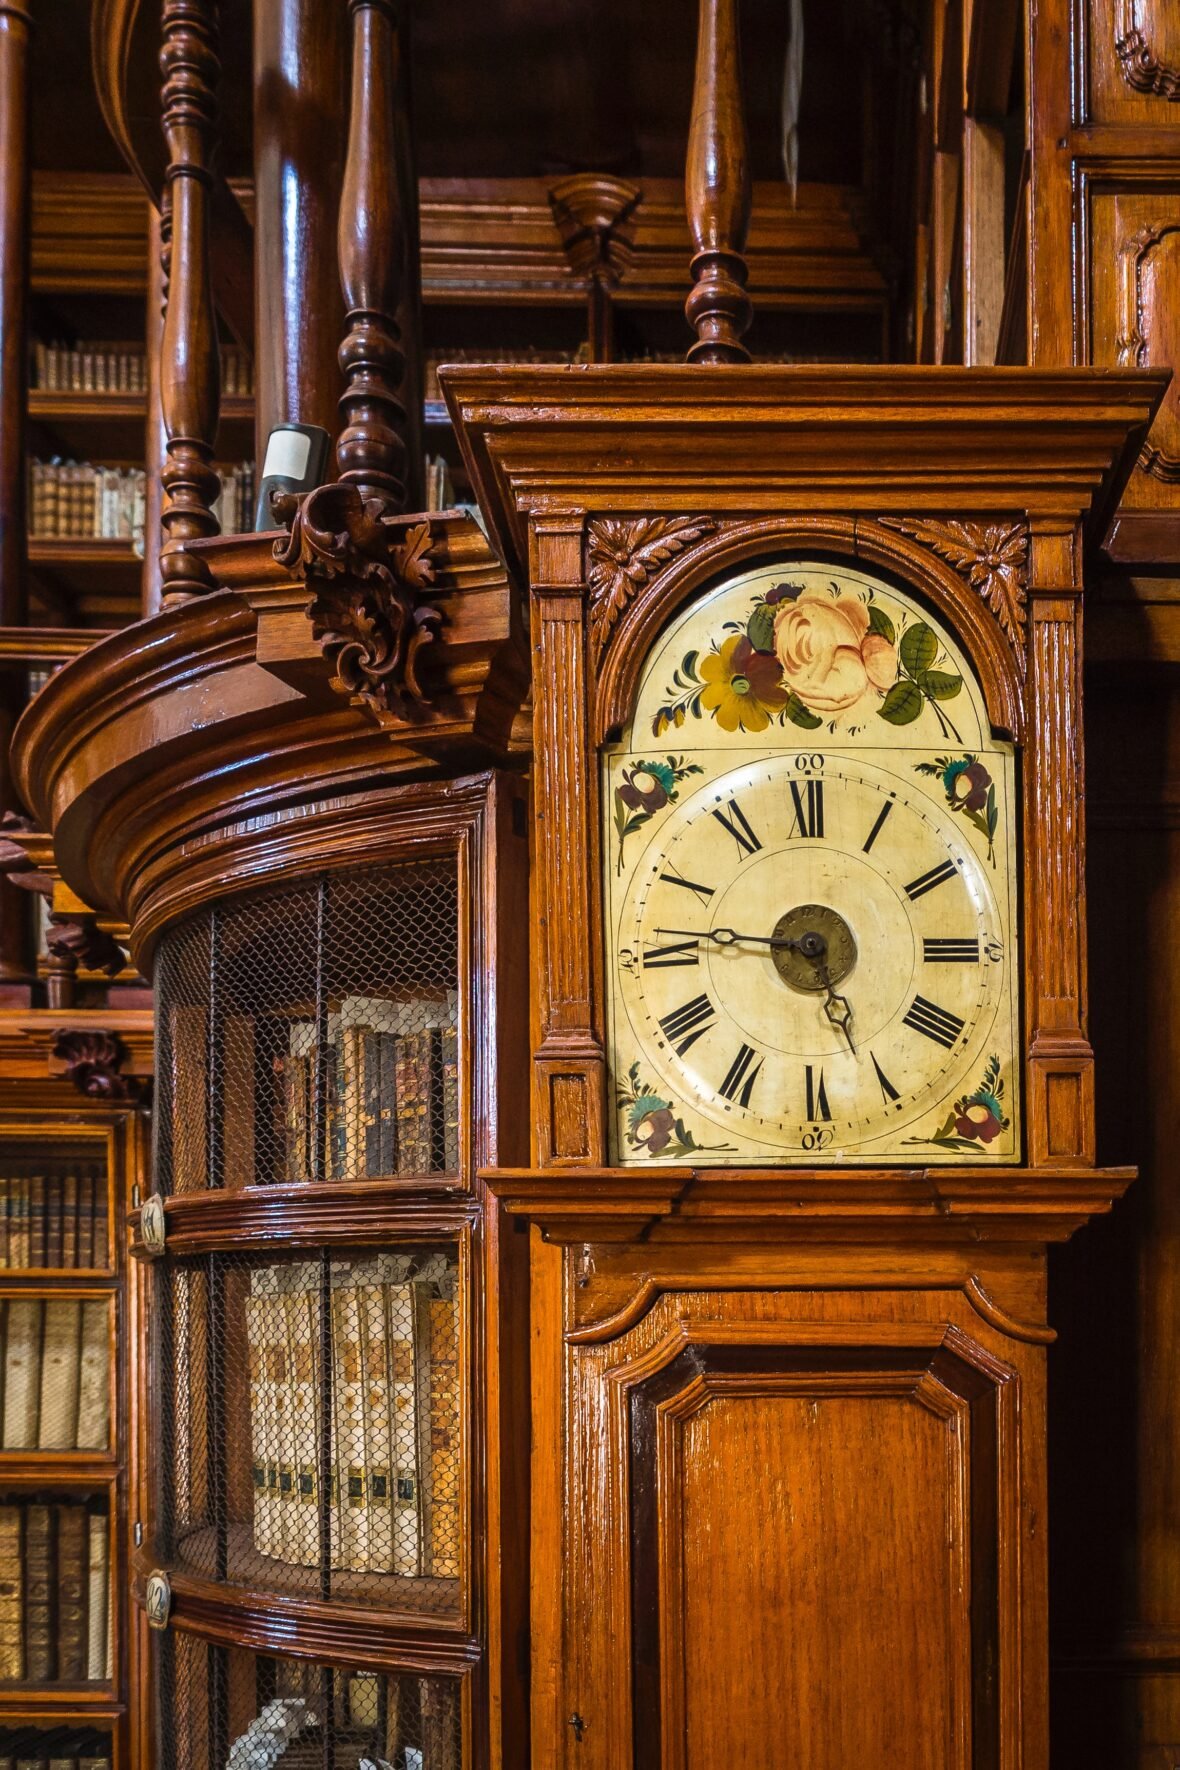 antique clocks guide for collectors: identifying antique clocks